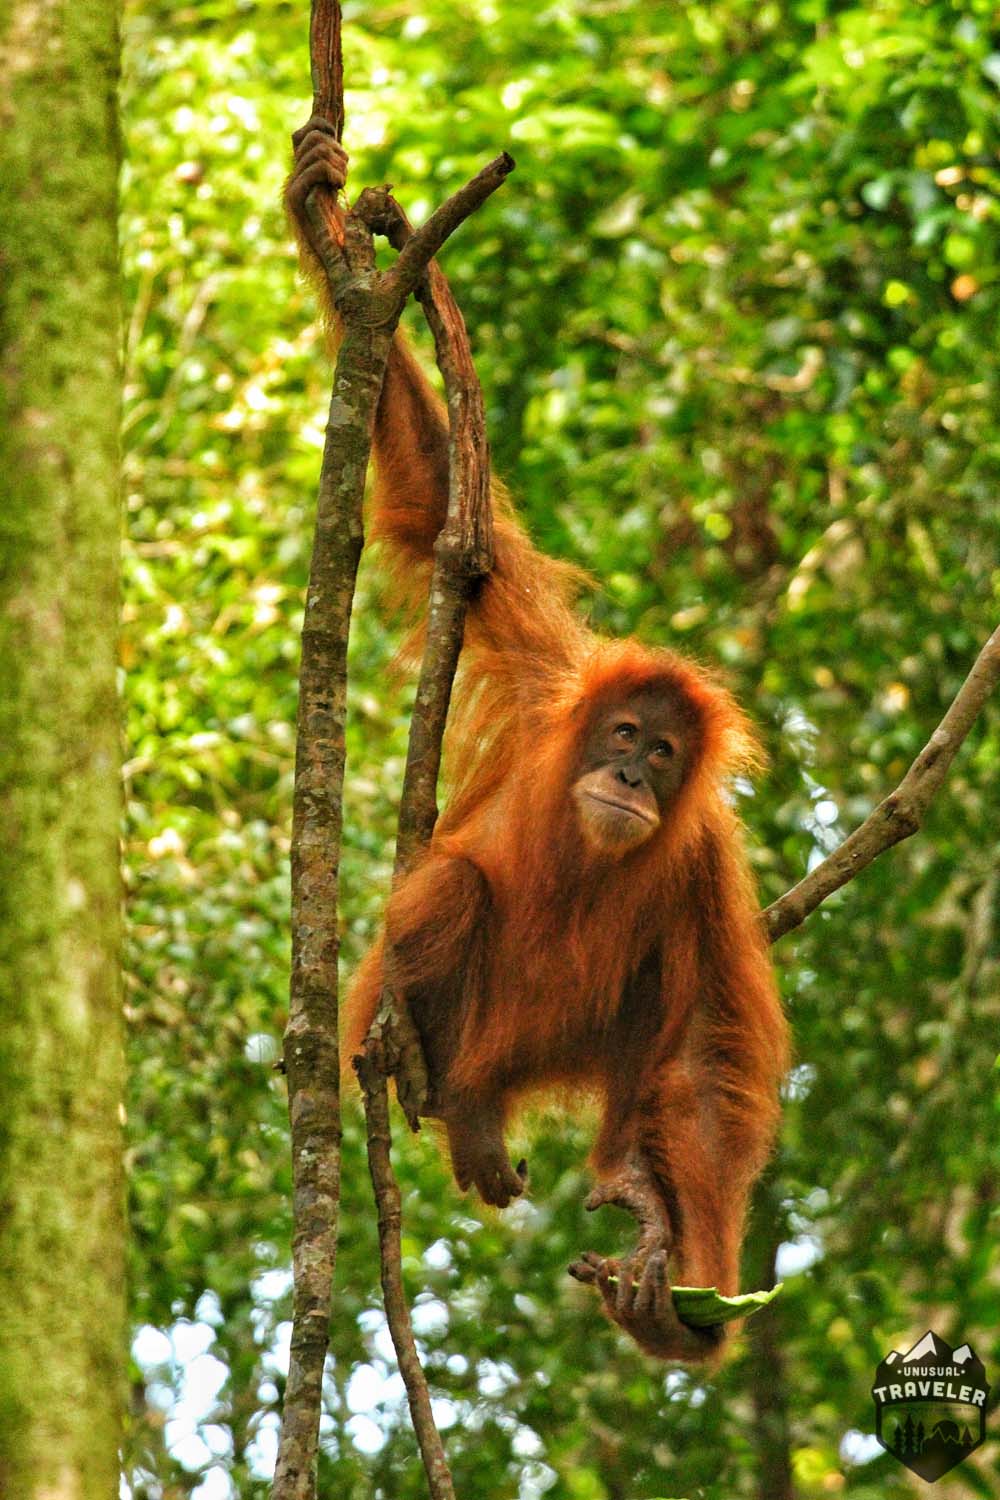    https://www.unusualtraveler.com/wp-content/uploads/2015/08/orangutan-in-indonesia.jpg   